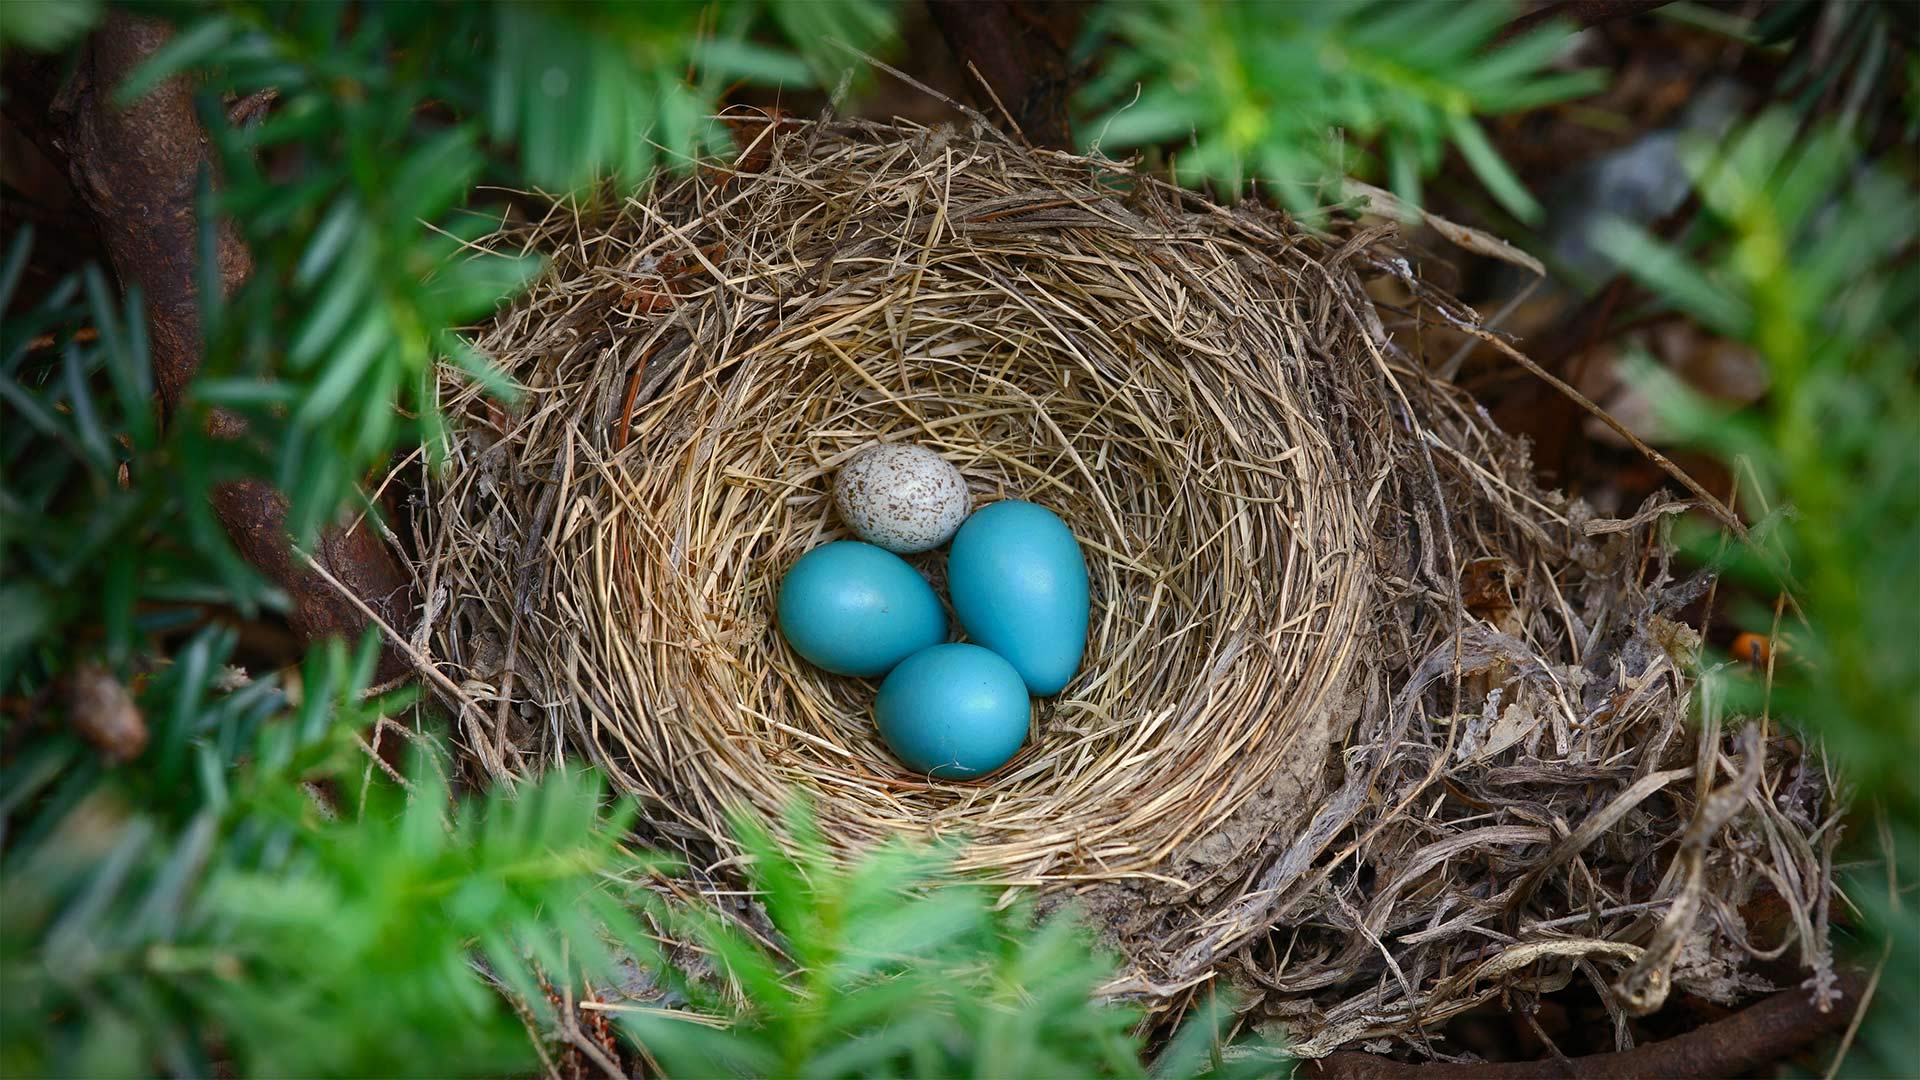 Robin's nest with a brown-headed cowbird egg - Edward Kinsman/Science Photo Library)